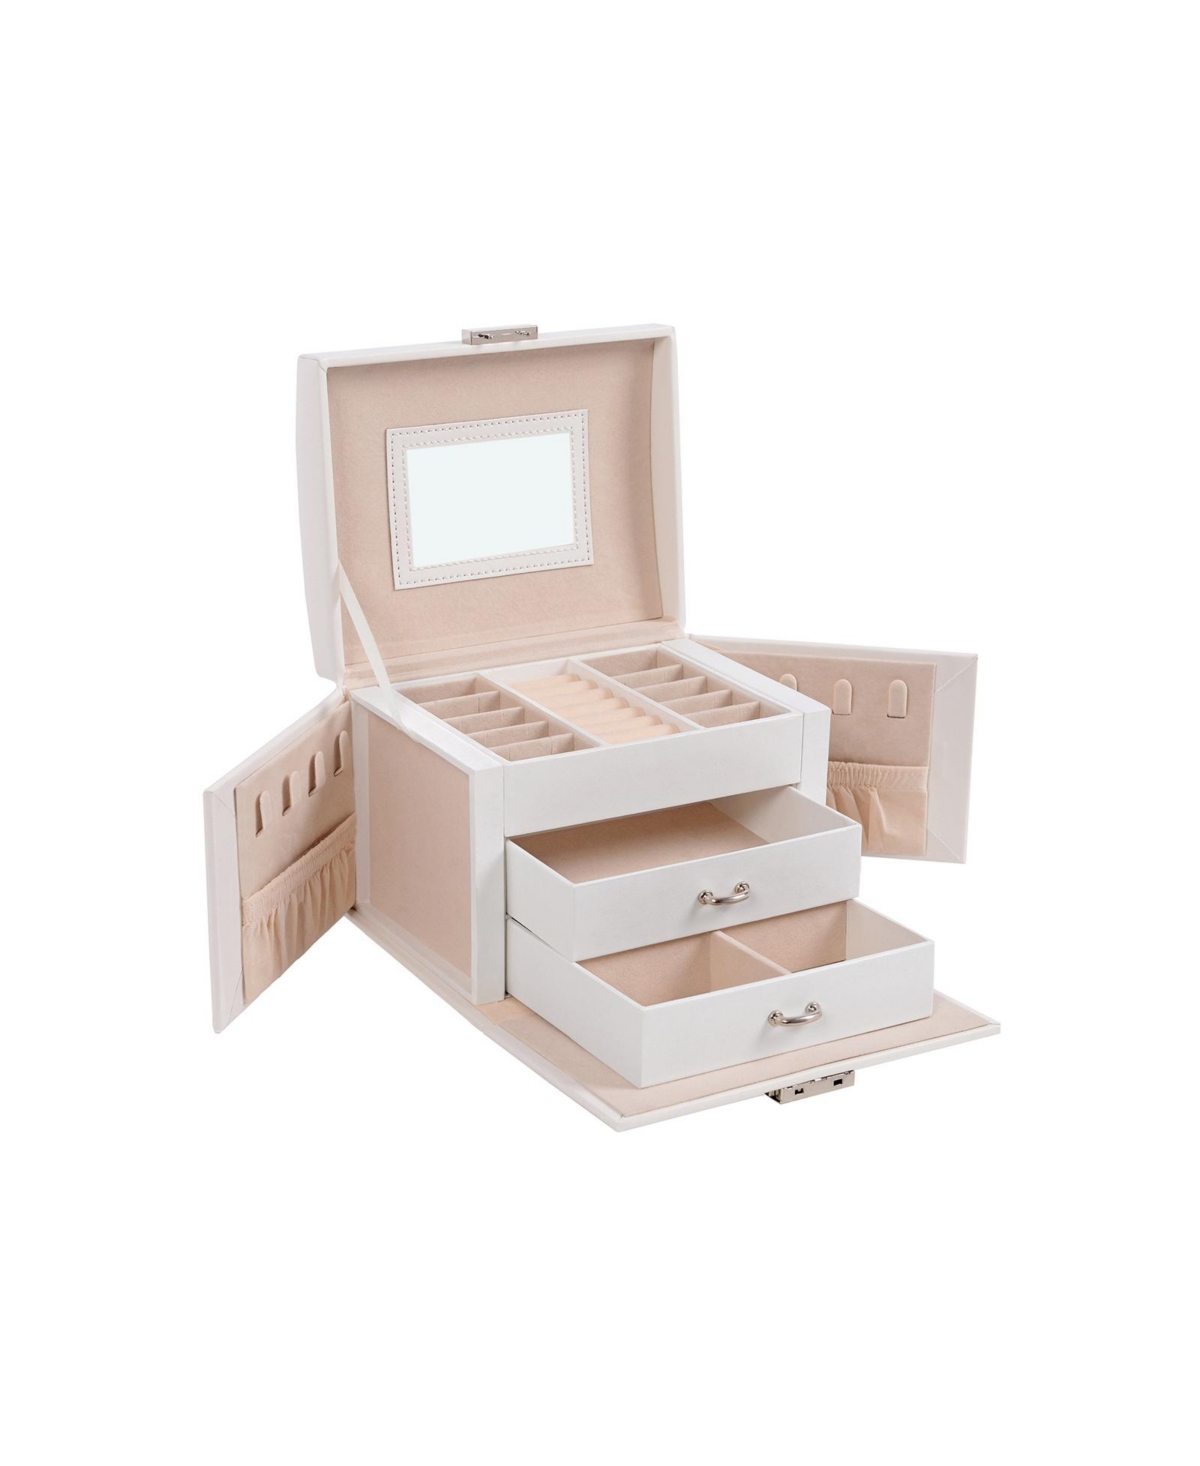 Jewelry Box, Travel Jewelry Case, Compact Jewelry Organizer with 2 Drawers, Mirror - White